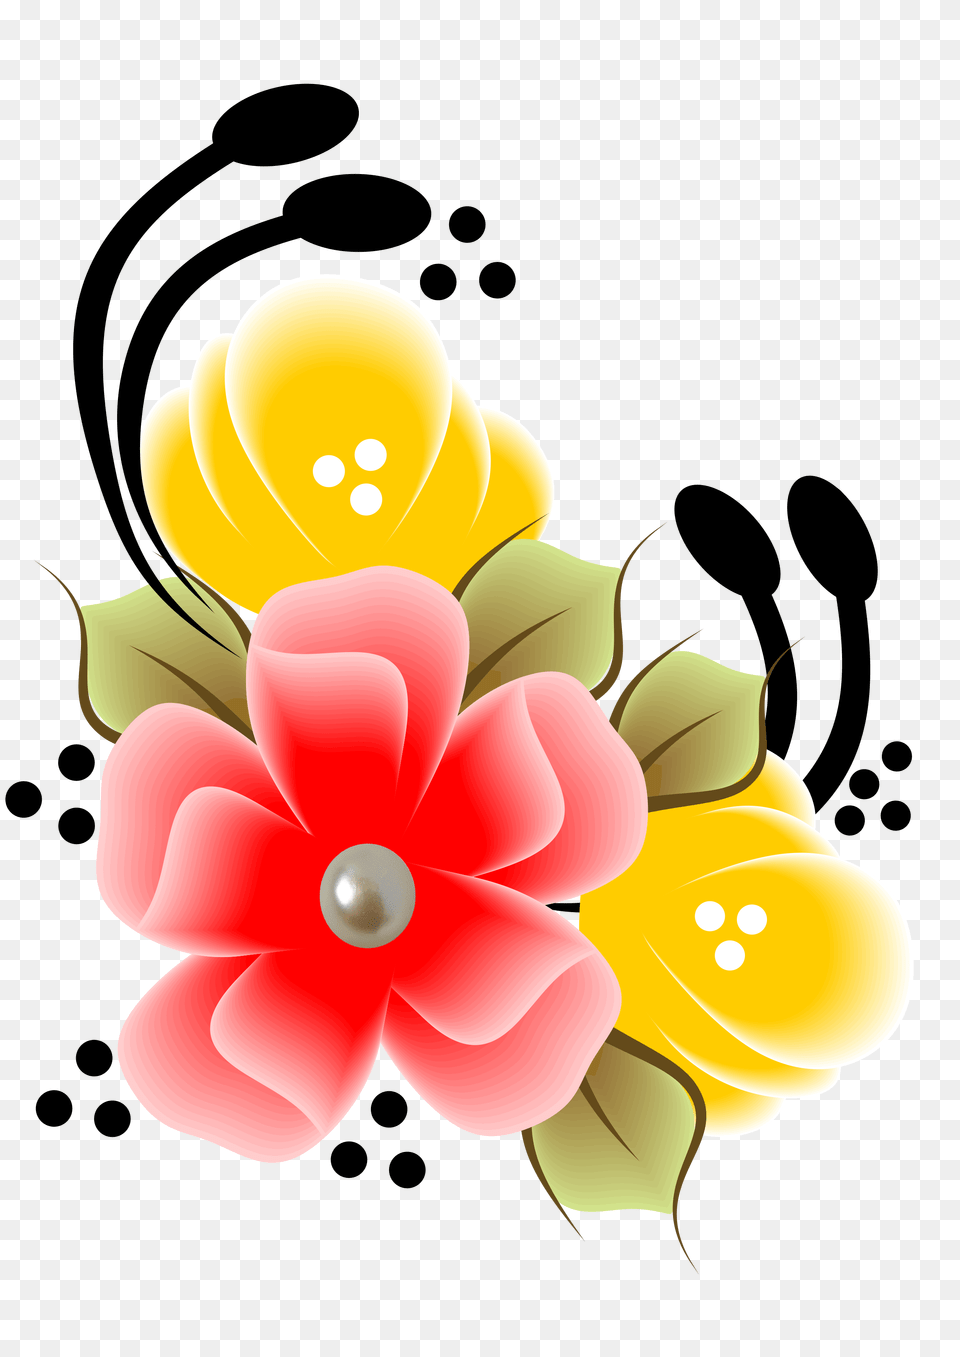 Flower Plus In Flower, Art, Floral Design, Graphics, Pattern Free Transparent Png